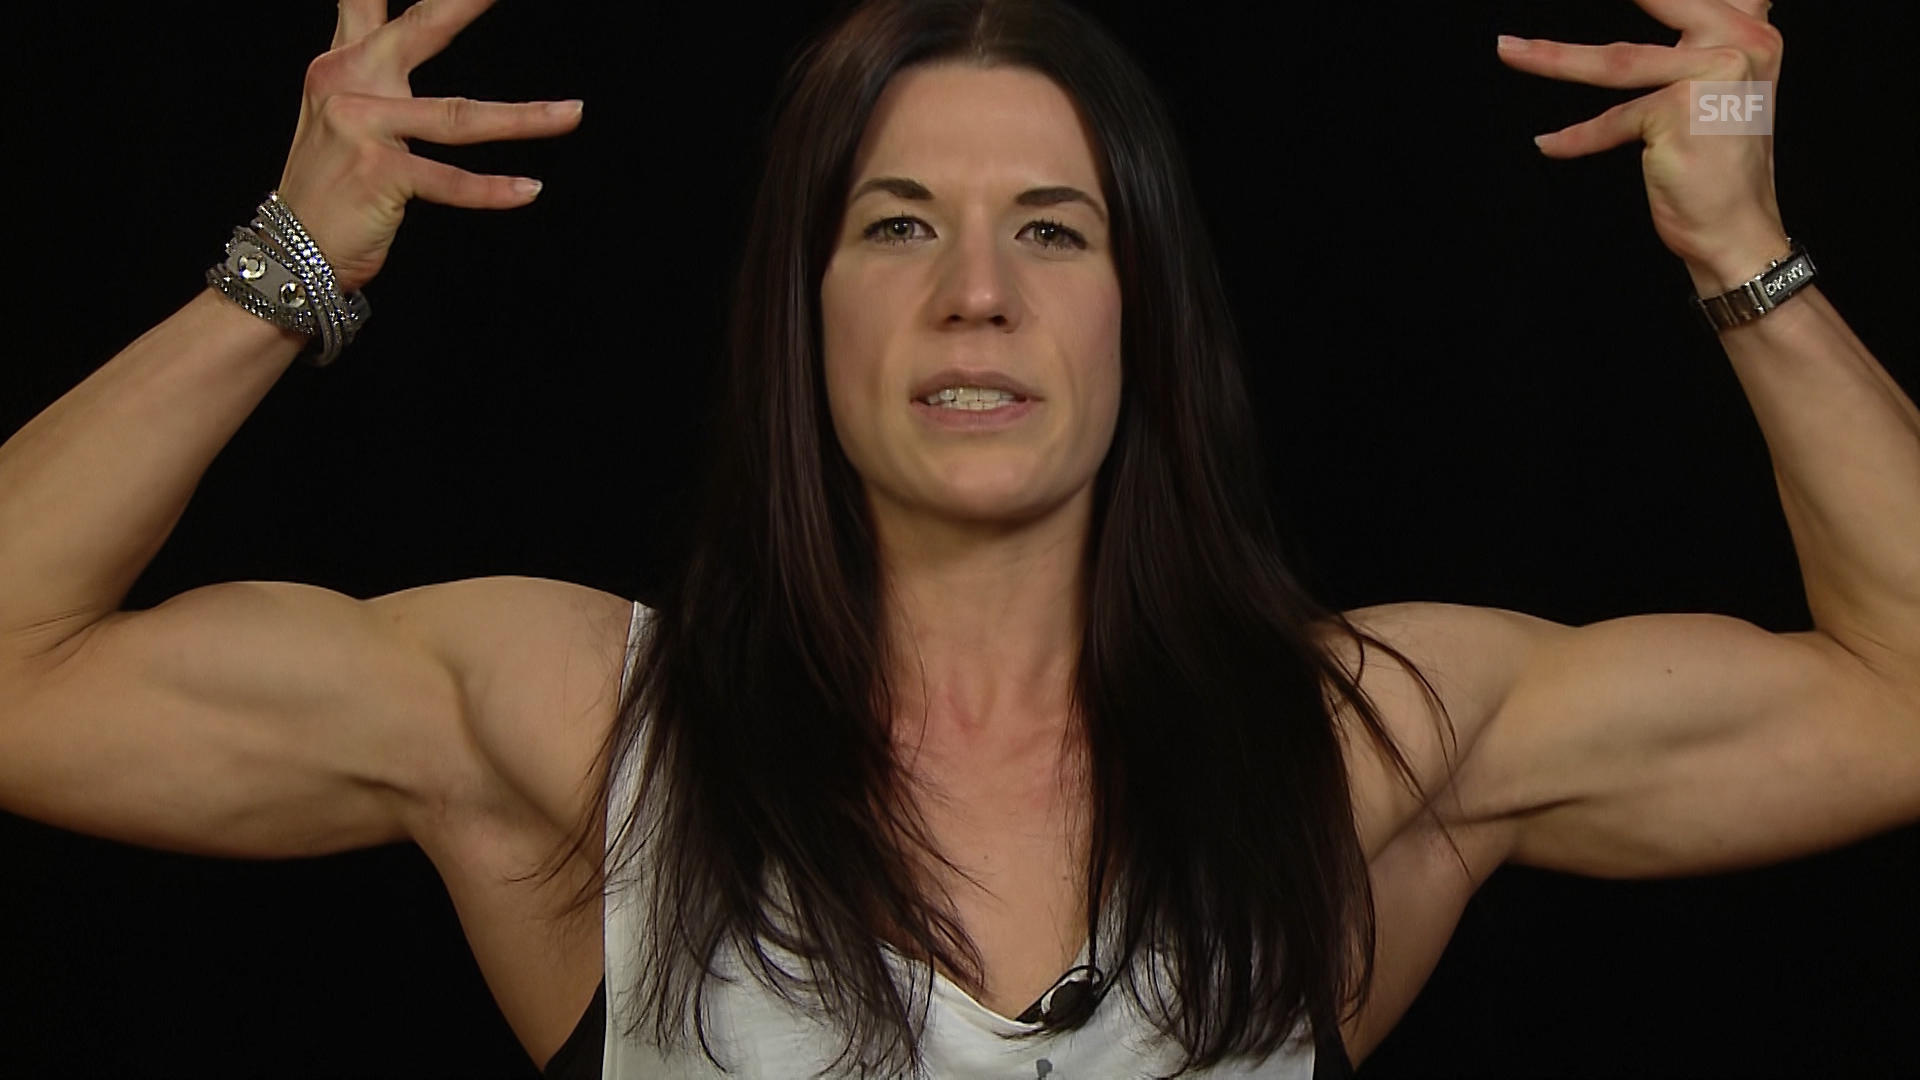 Anita flexing muscles